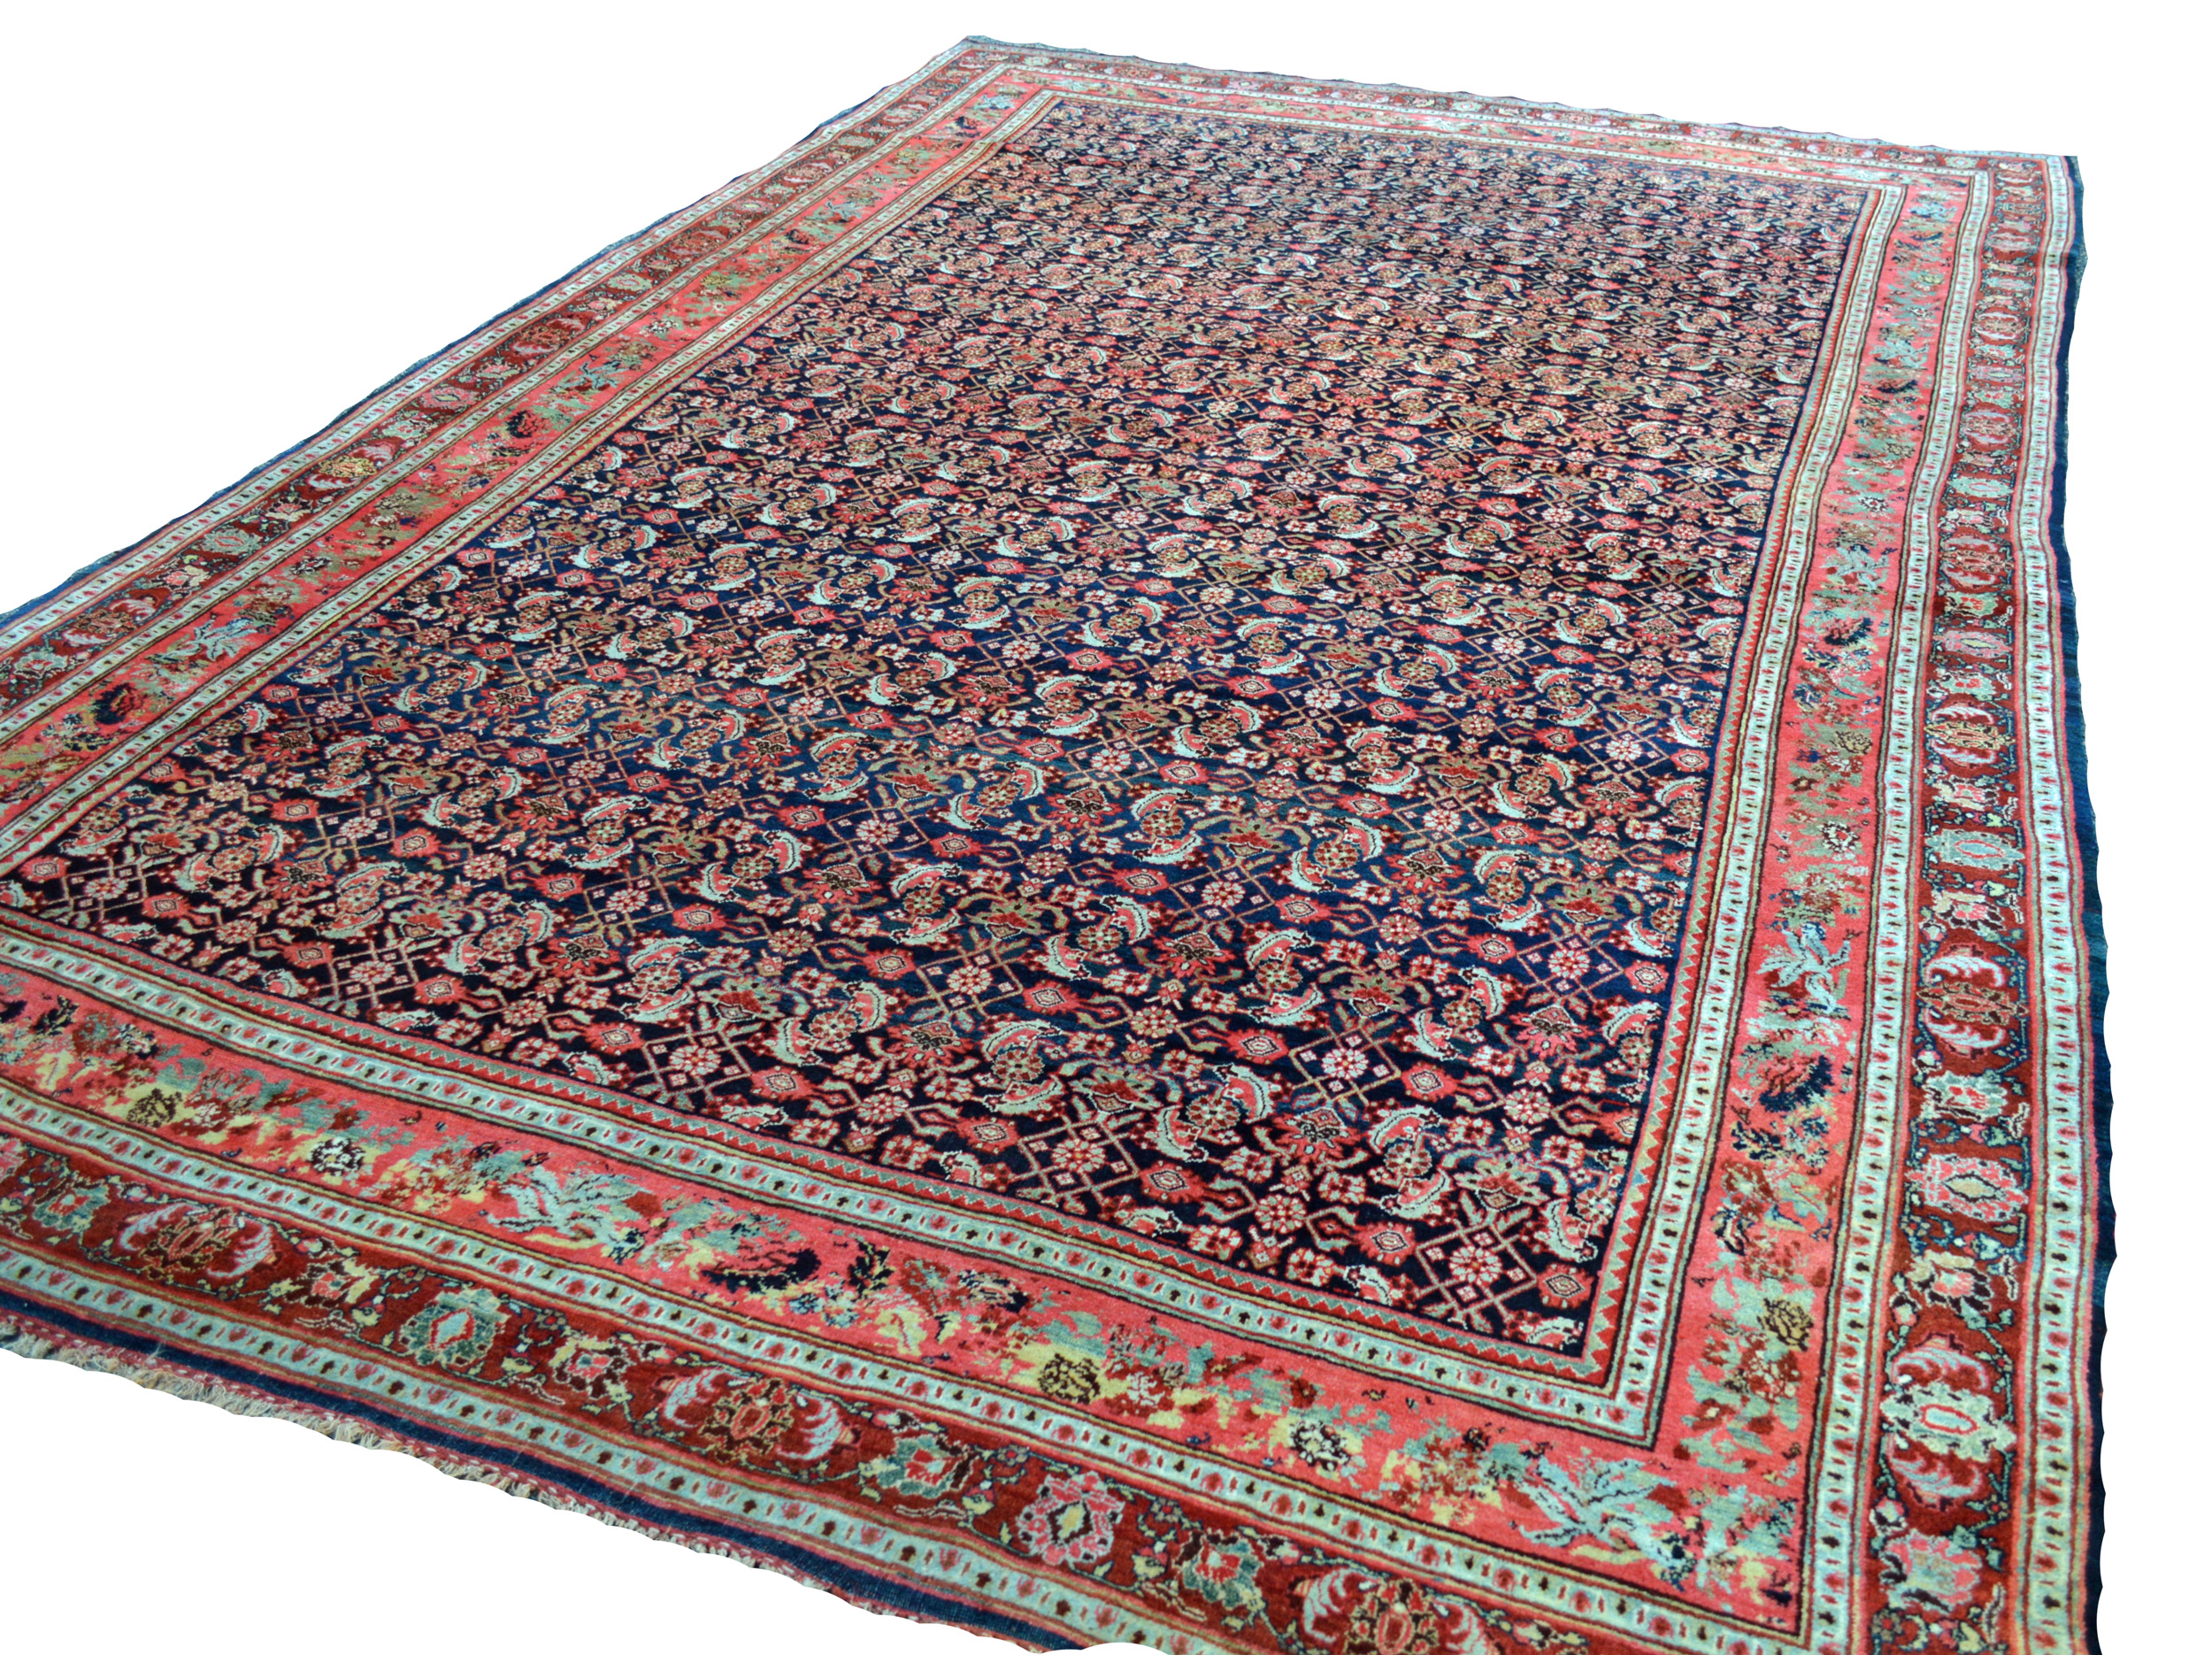 Antique northwest Persian Bidjar carpet, Kurdistan province, circa 1900, with the classical Herati design on a navy blue field - Douglas Stock Gallery, antique Persian rugs, Boston,MA area